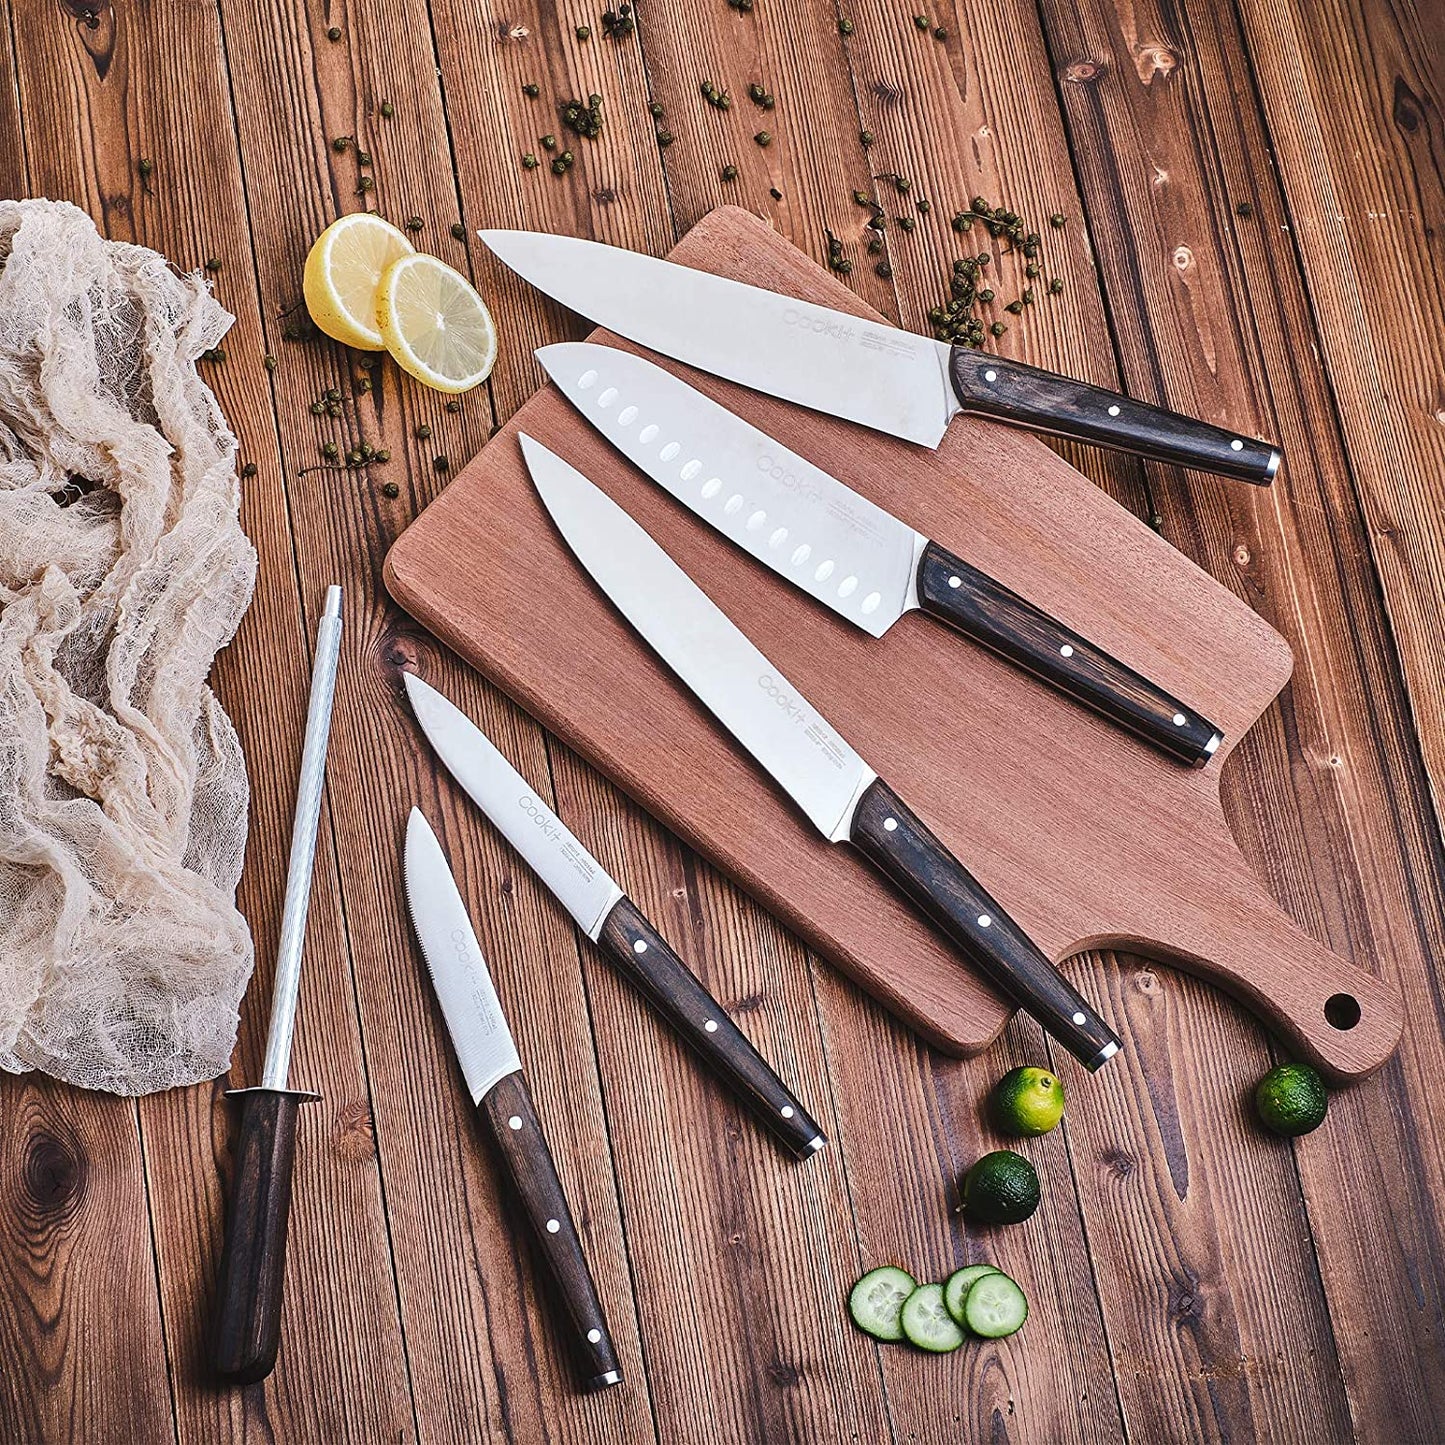 Knife Sets15 Pieces German Stainless Steel Knife Block Sets Built-In  Sharpener